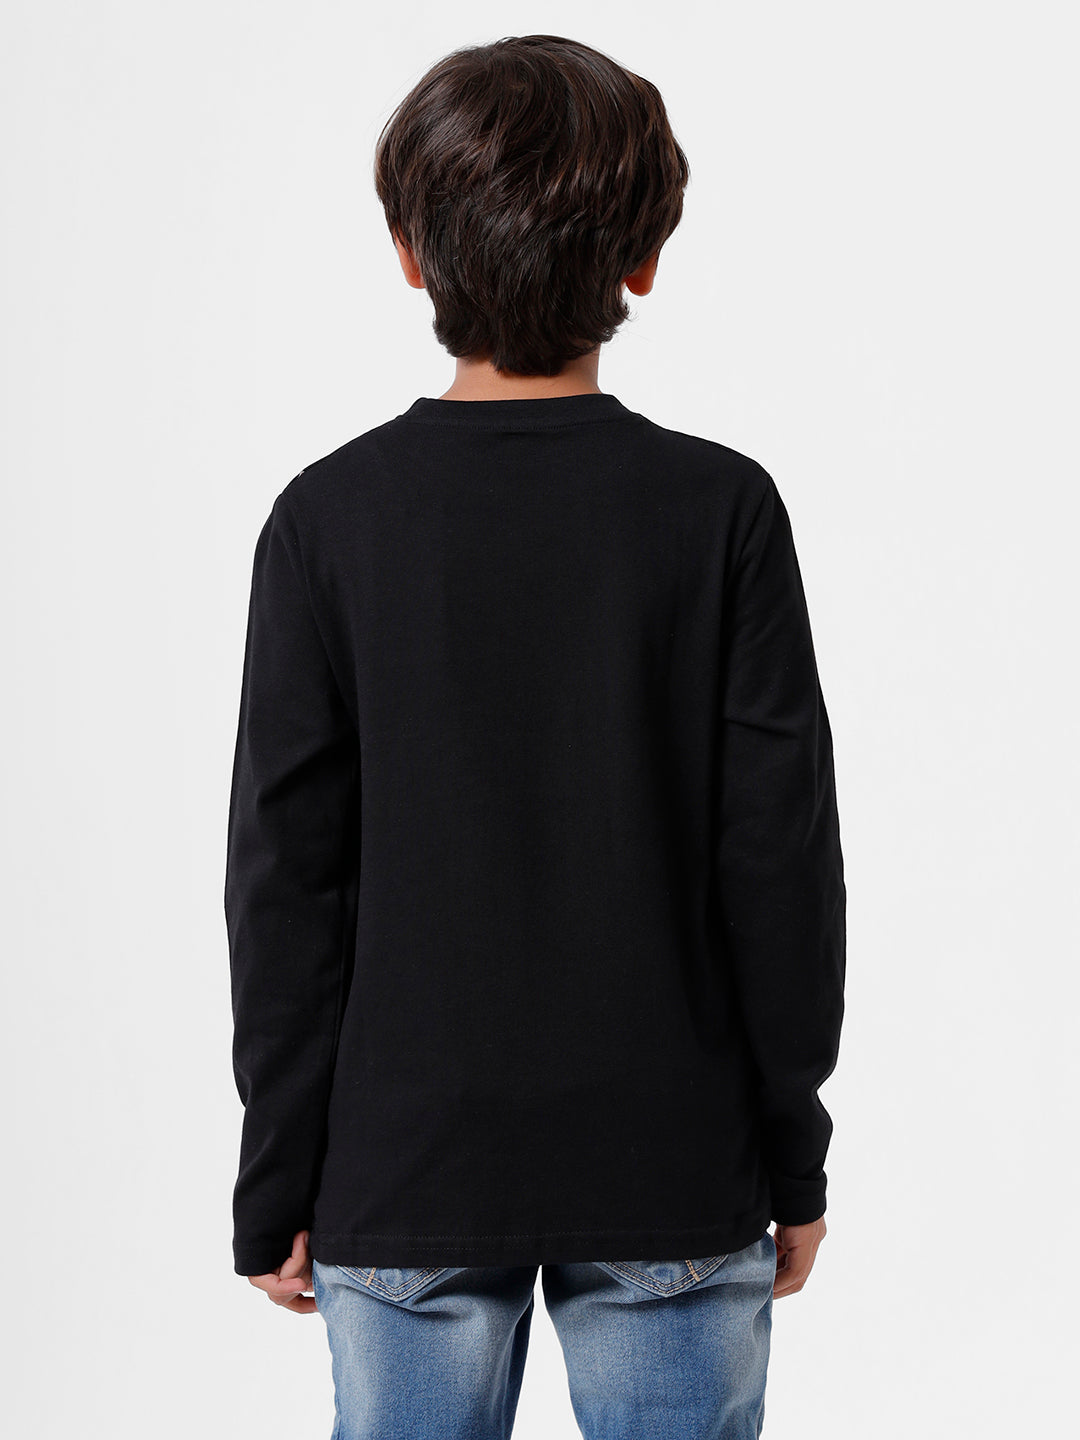 Kids - Boys Printed Full Sleeve T-Shirt Black